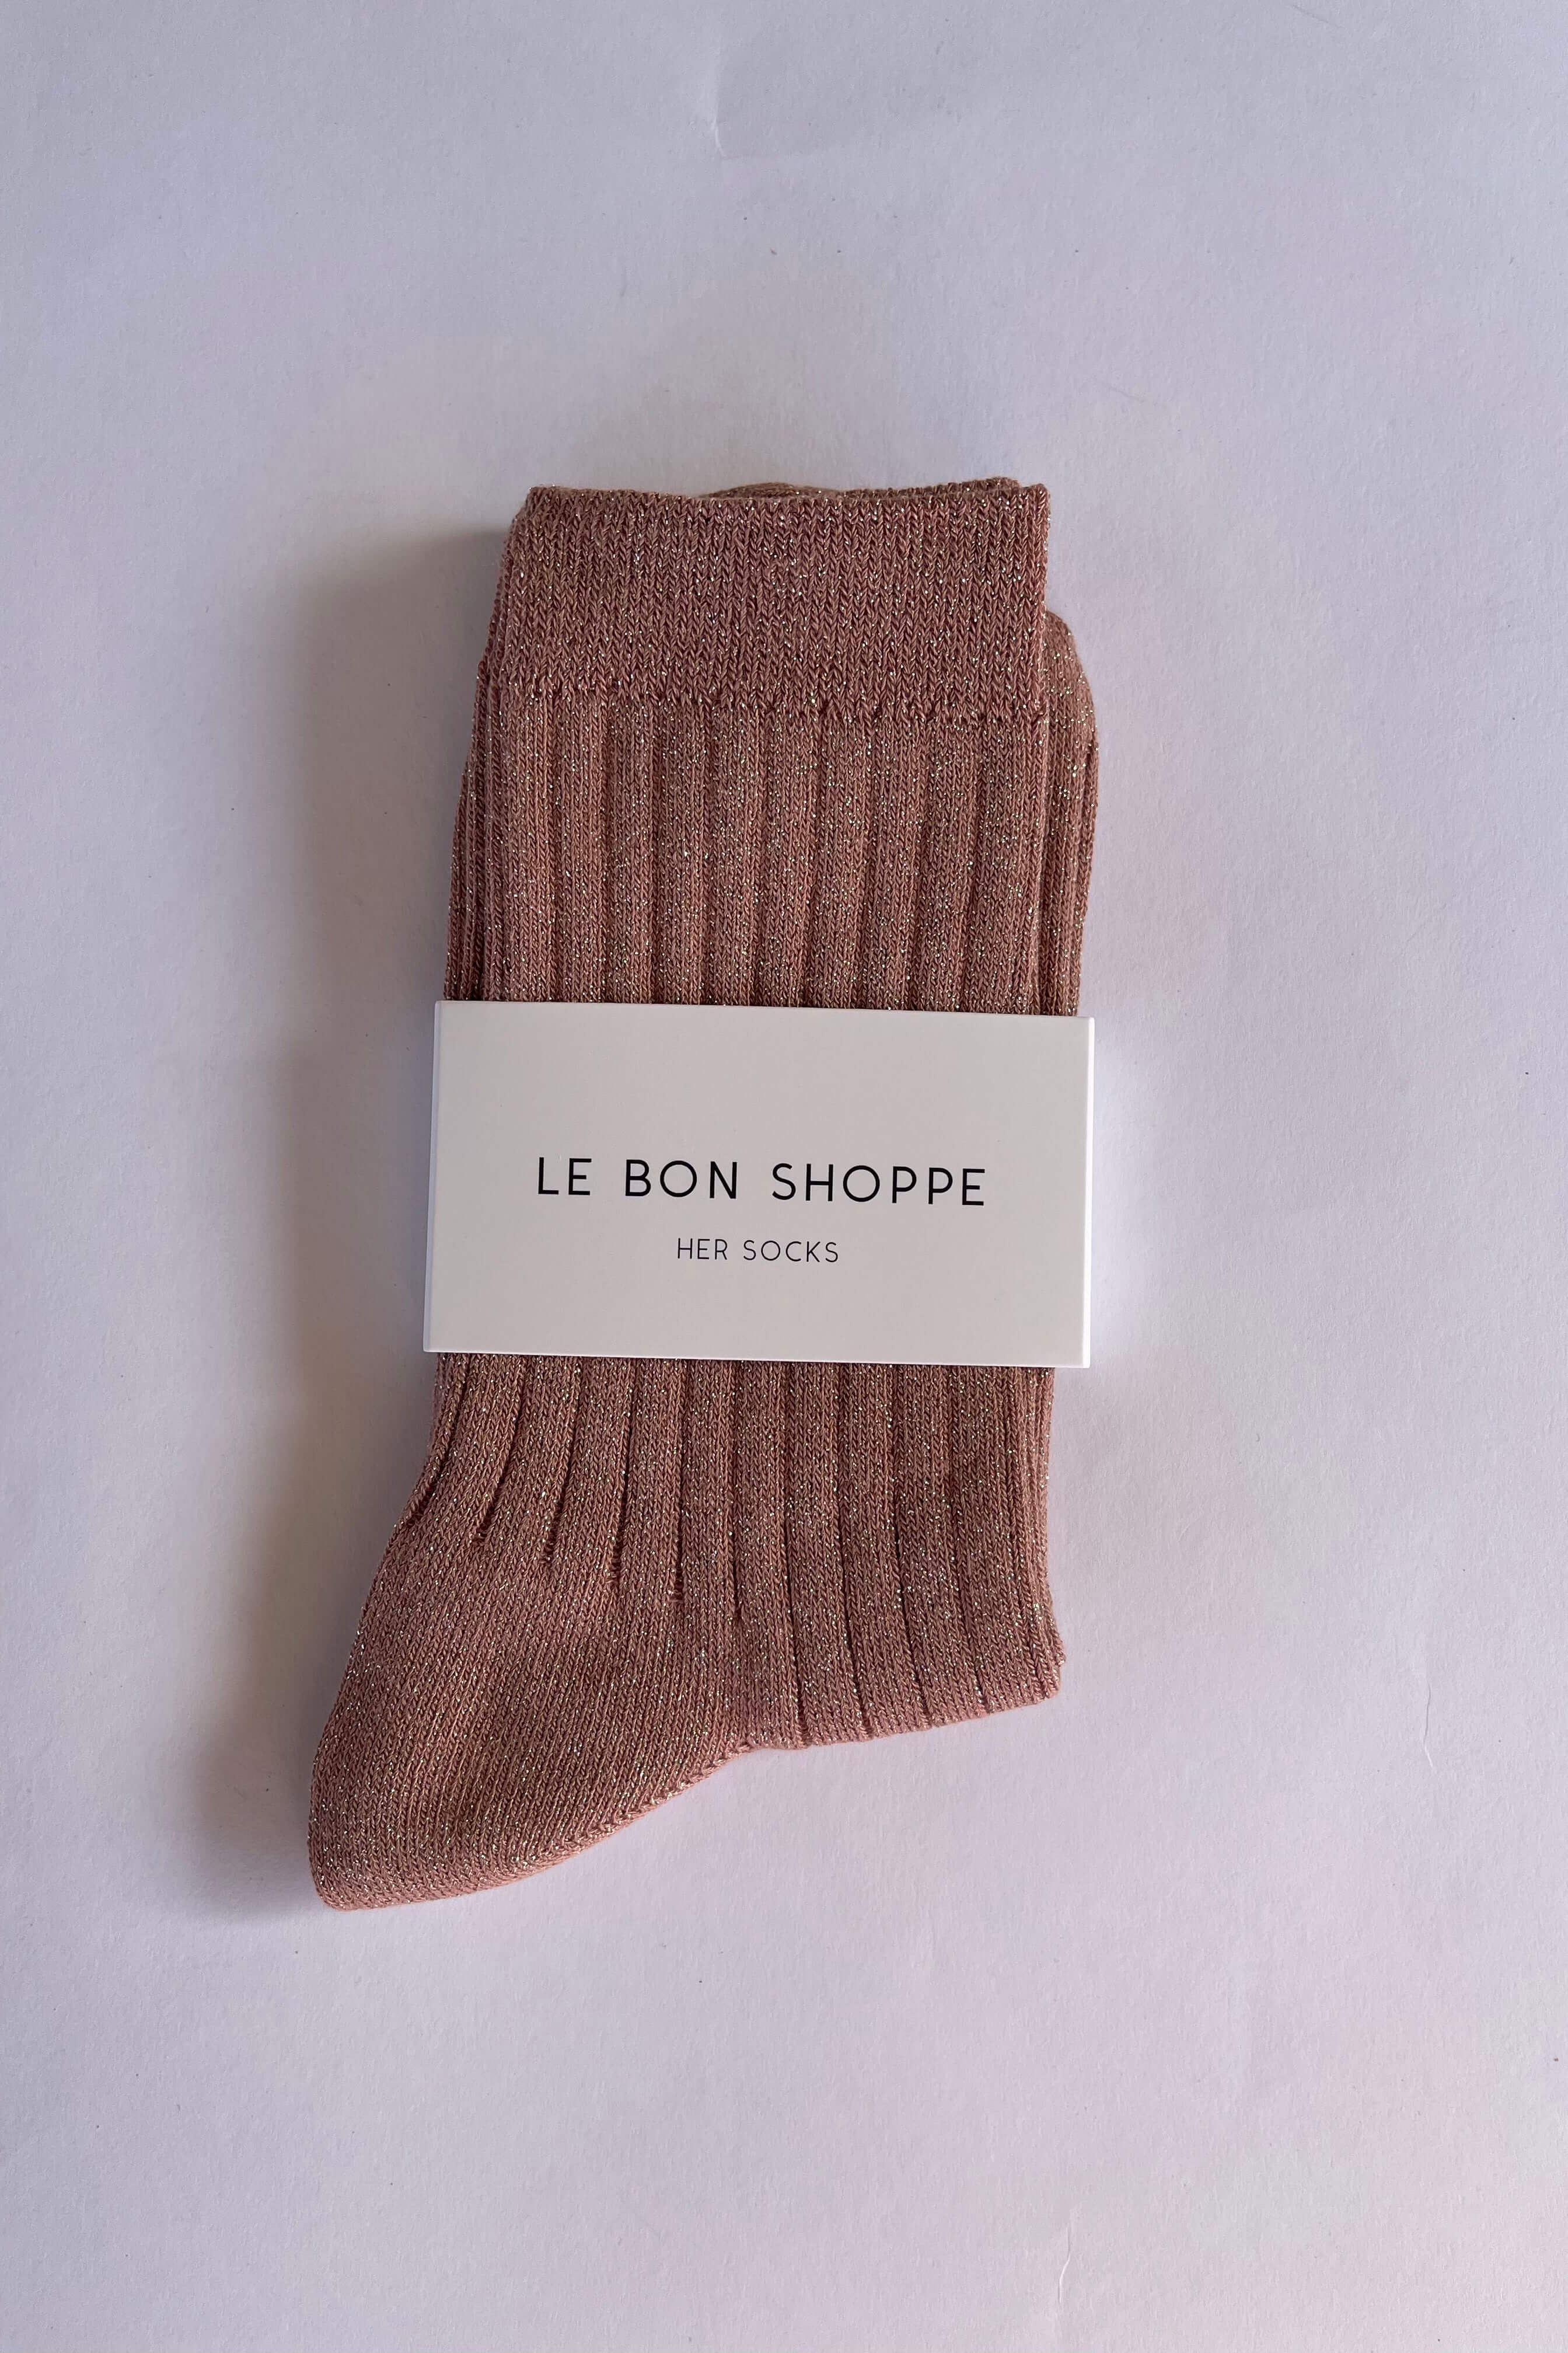 Her Socks | Nude Peach | by Le Bon Shoppe - Lifestory - Le Bon Shoppe